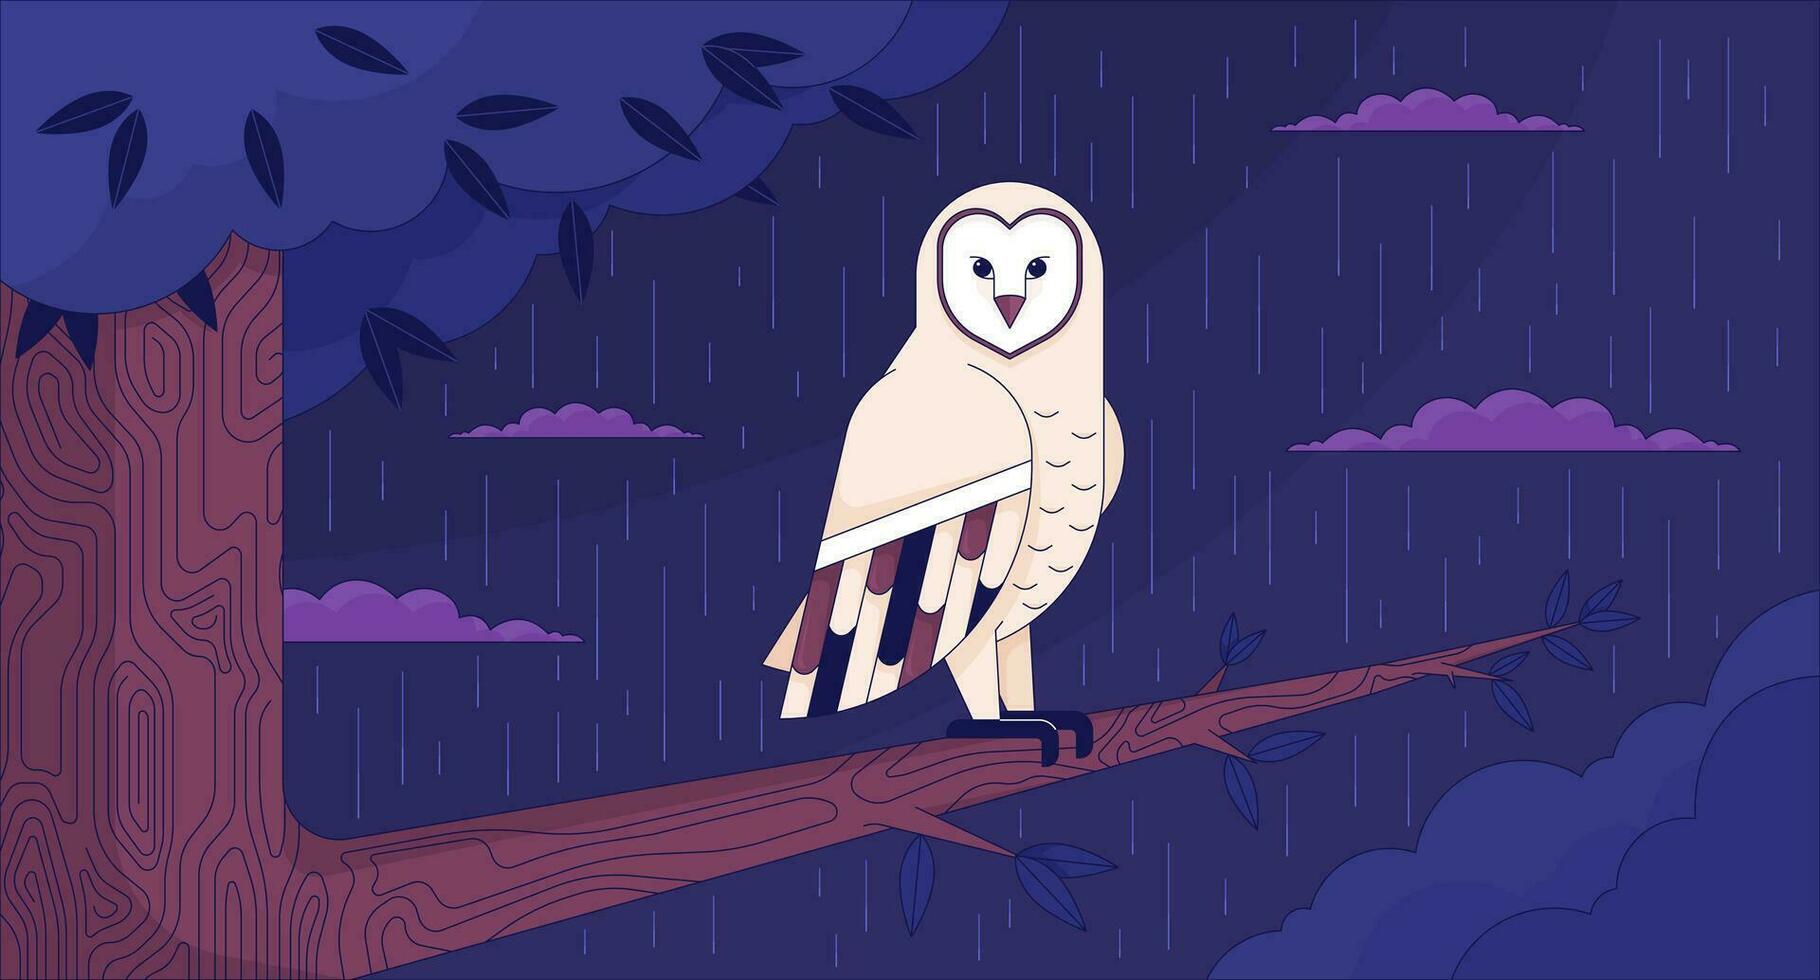 Owl sitting on tree branch in night rainy lofi wallpaper. Nocturnal bird of prey forest rainy 2D cartoon flat illustration. Nostalgia. Dreamy vibe chill vector art, lo fi aesthetic colorful background